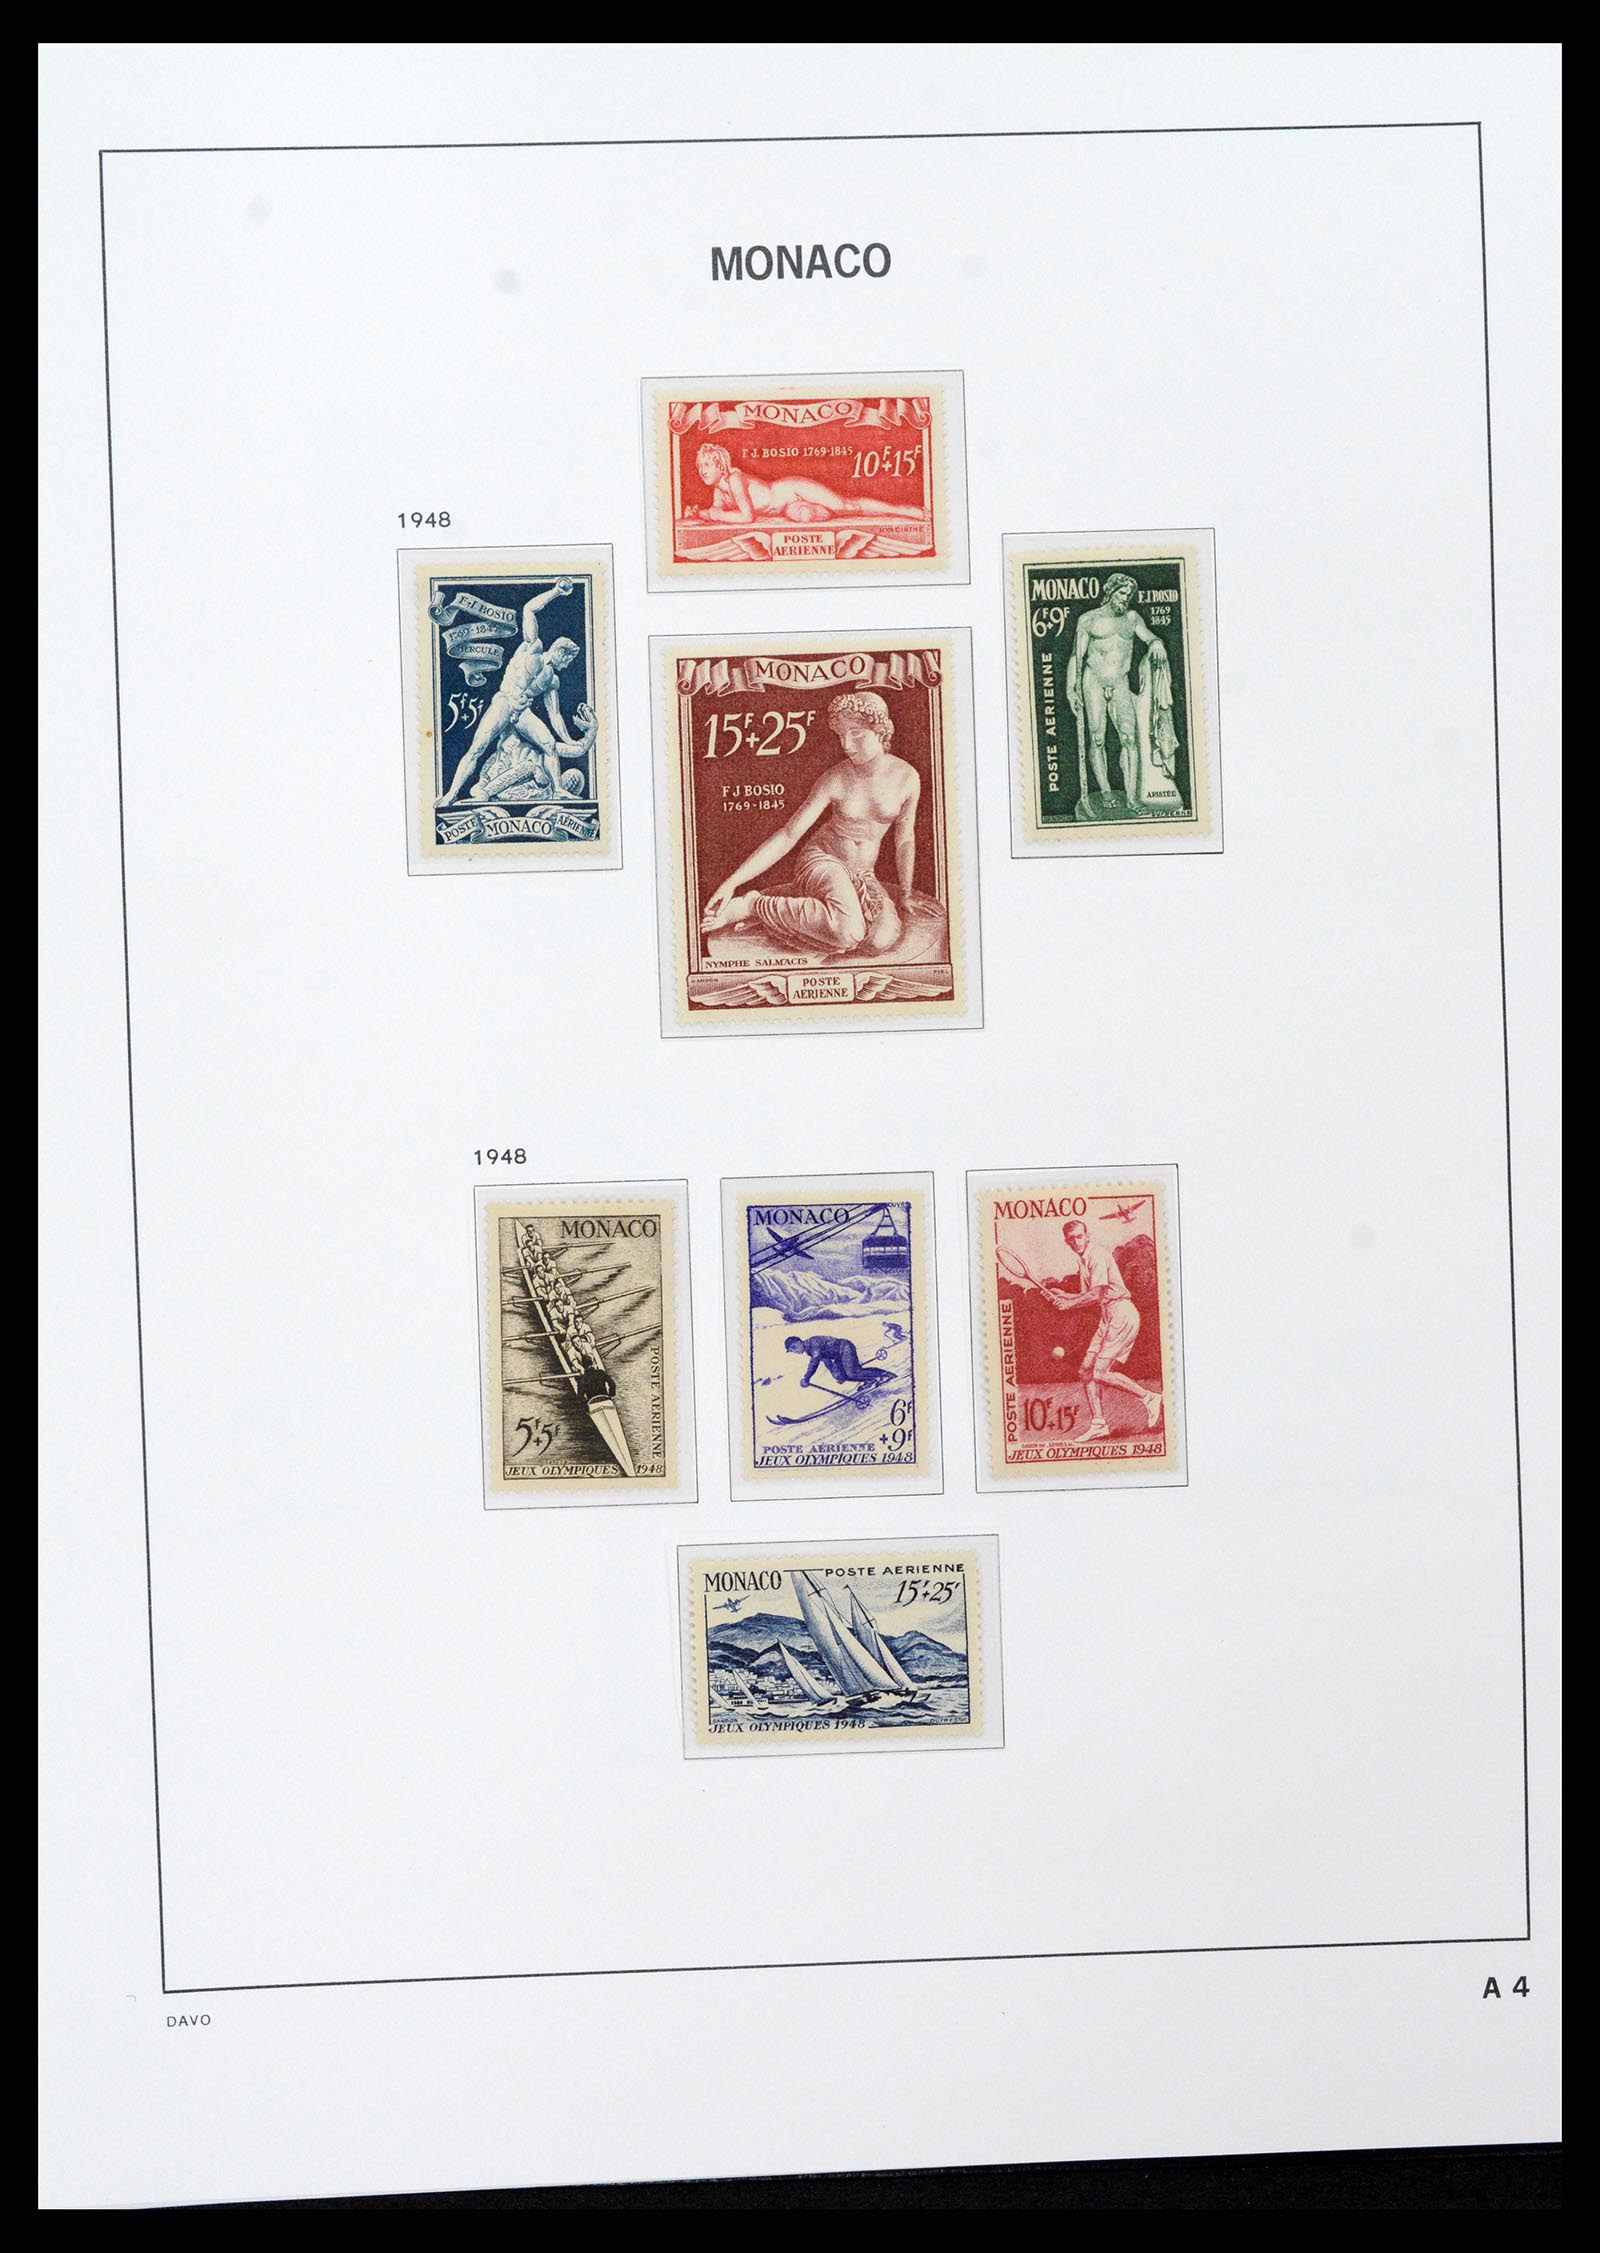 37279 061 - Stamp collection 37279 Monaco 1885-1969.